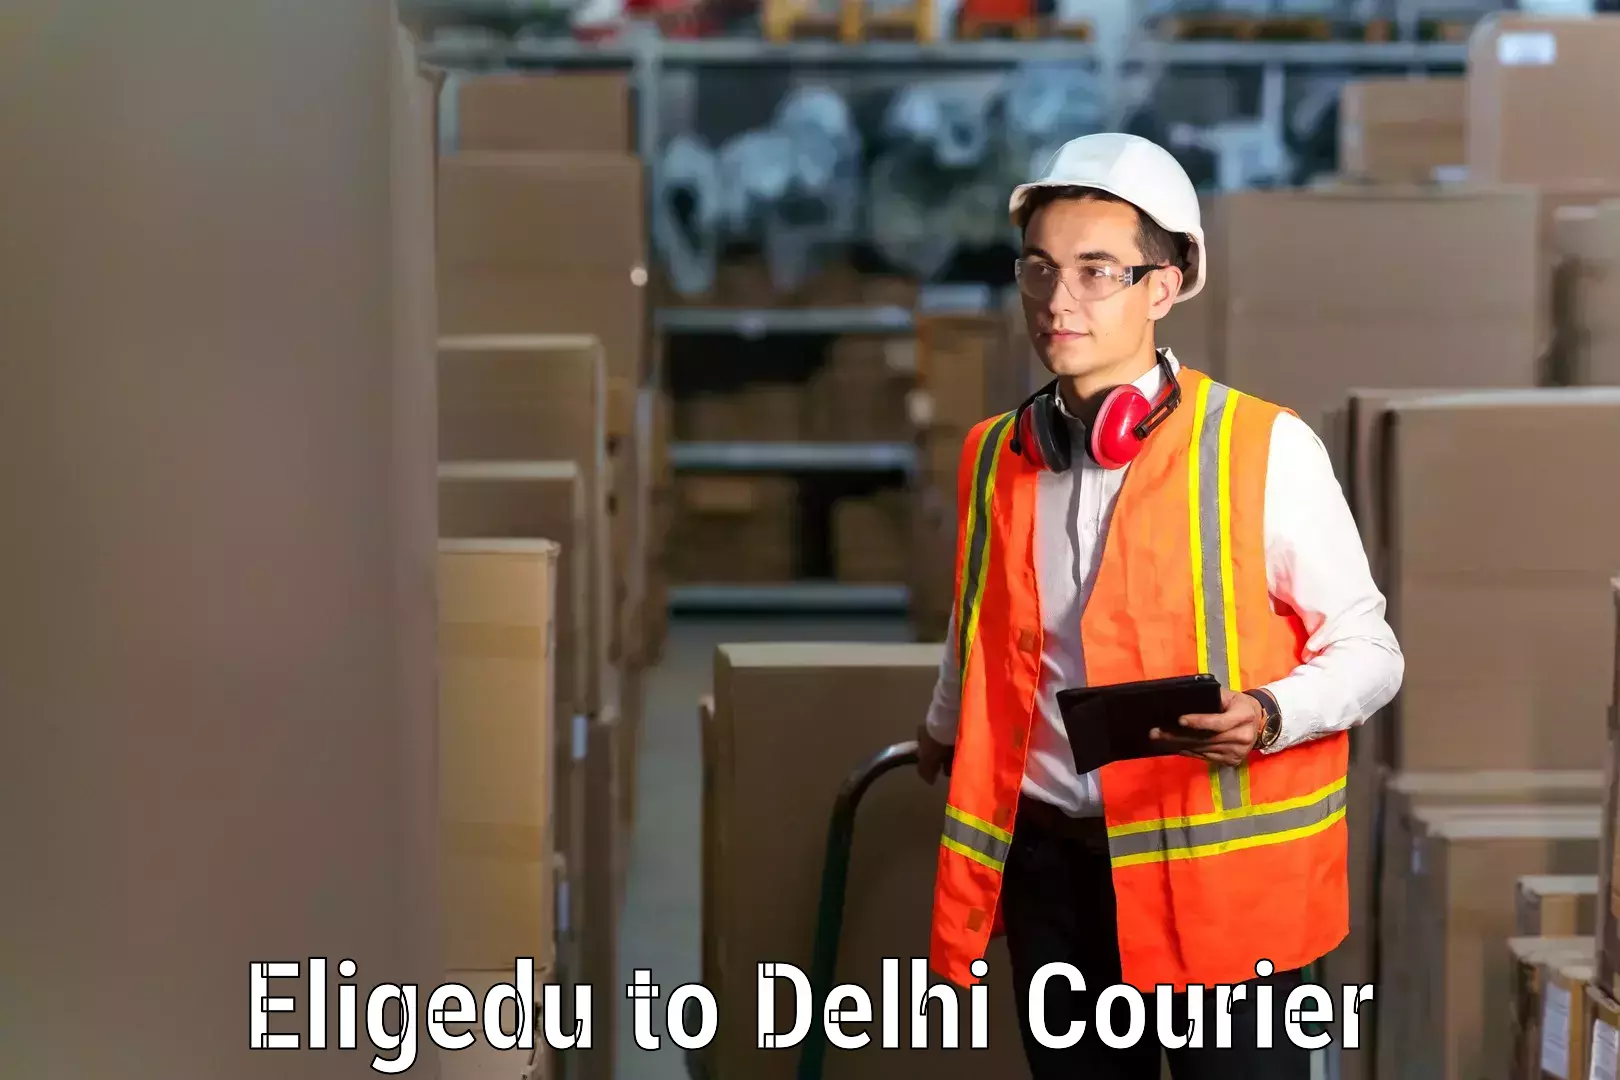 Household goods transport service Eligedu to Delhi